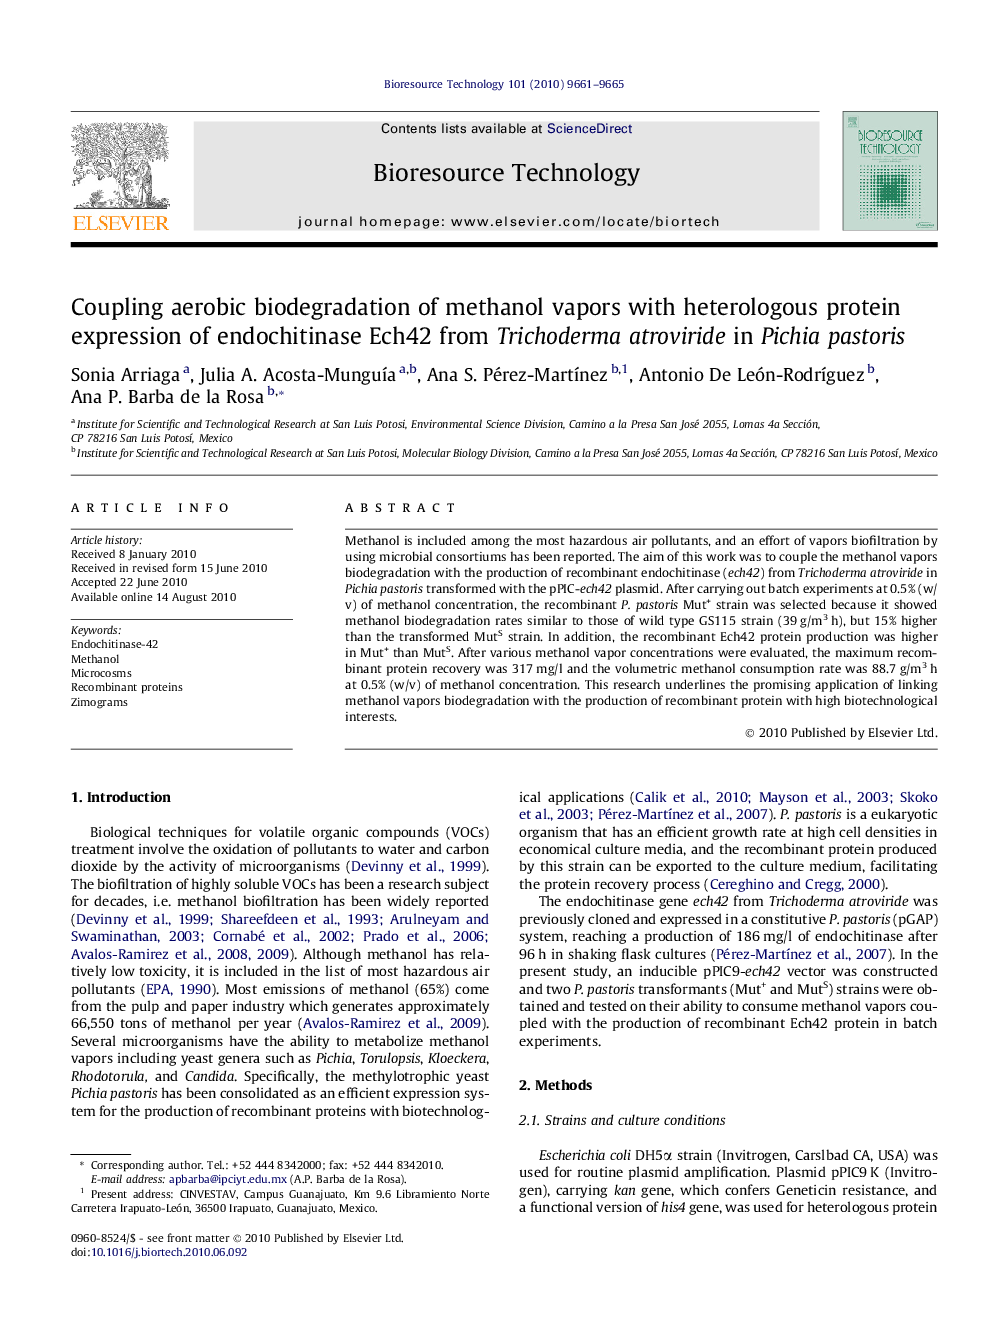 Coupling aerobic biodegradation of methanol vapors with heterologous protein expression of endochitinase Ech42 from Trichoderma atroviride in Pichia pastoris